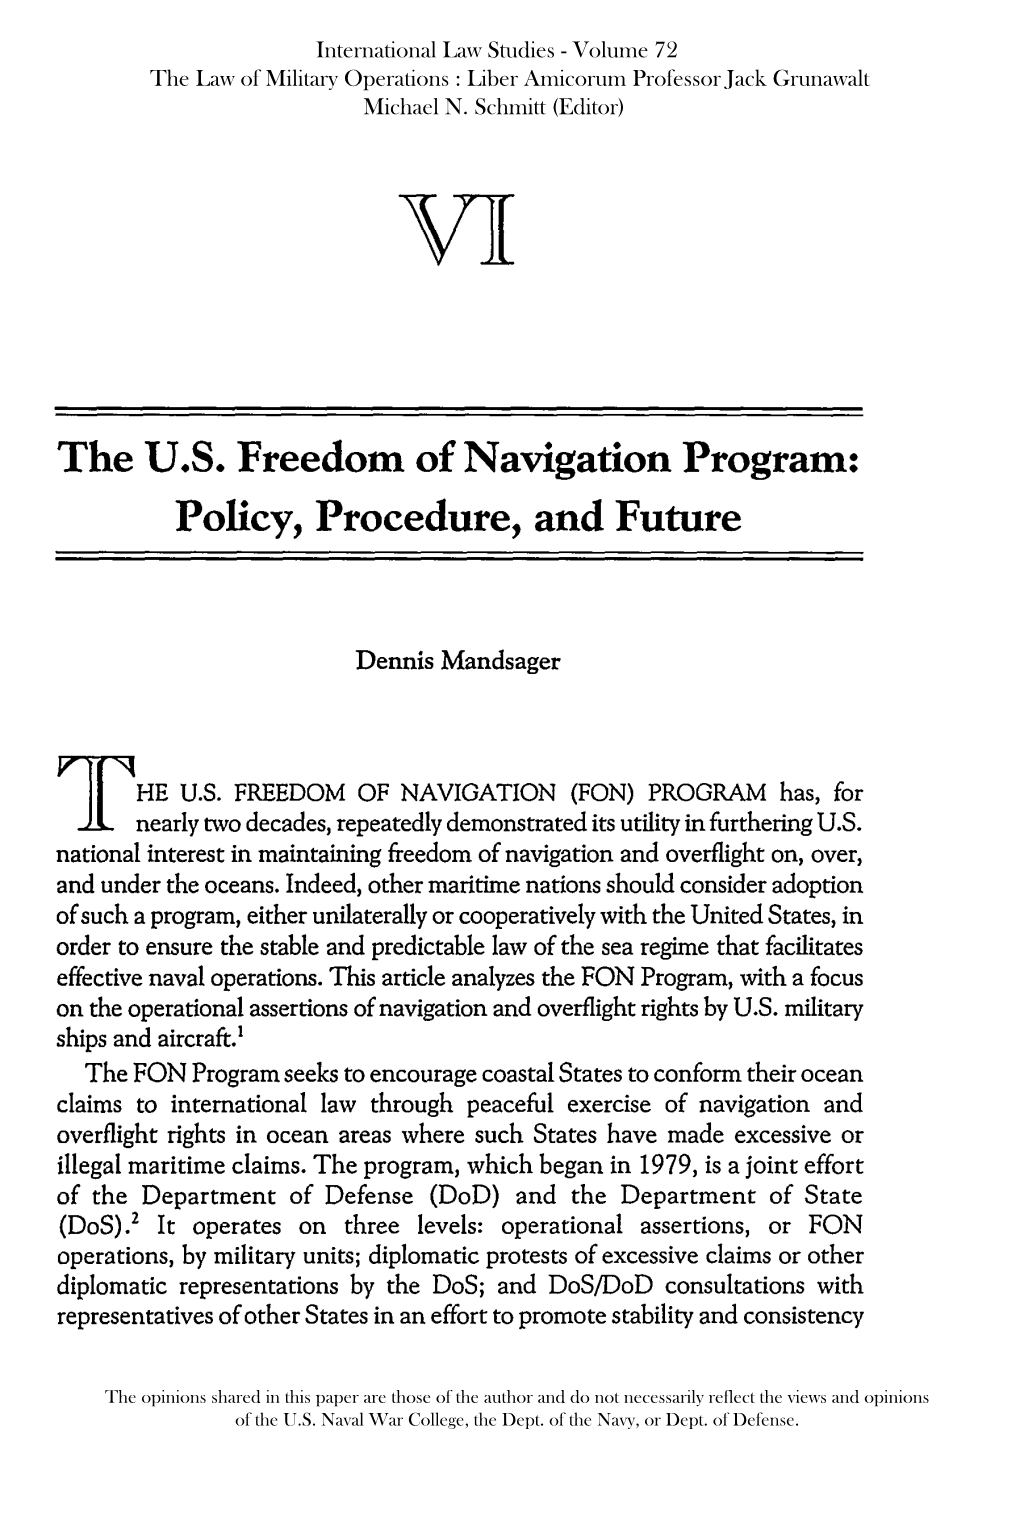 The U.S. Freedom of Navigation Program, Procedure, and Future